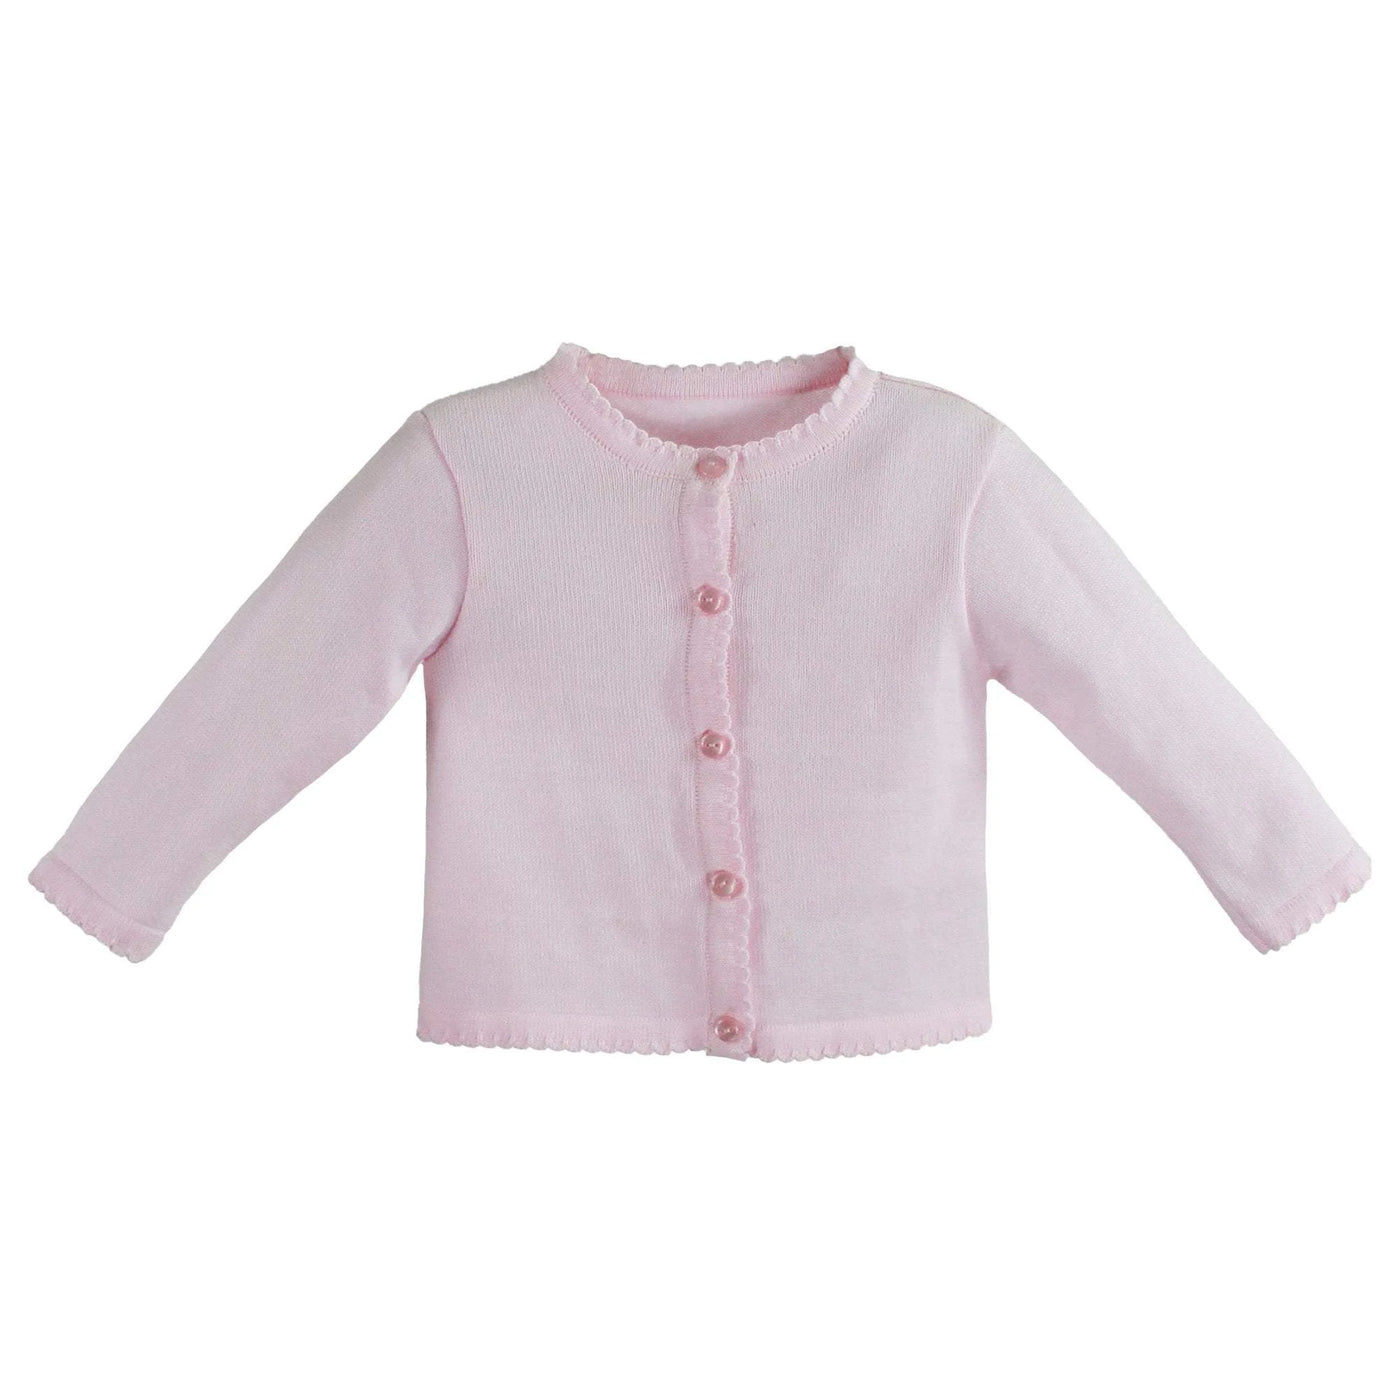 Scalloped Edge Cardigan Sweater - Pink - Breckenridge Baby